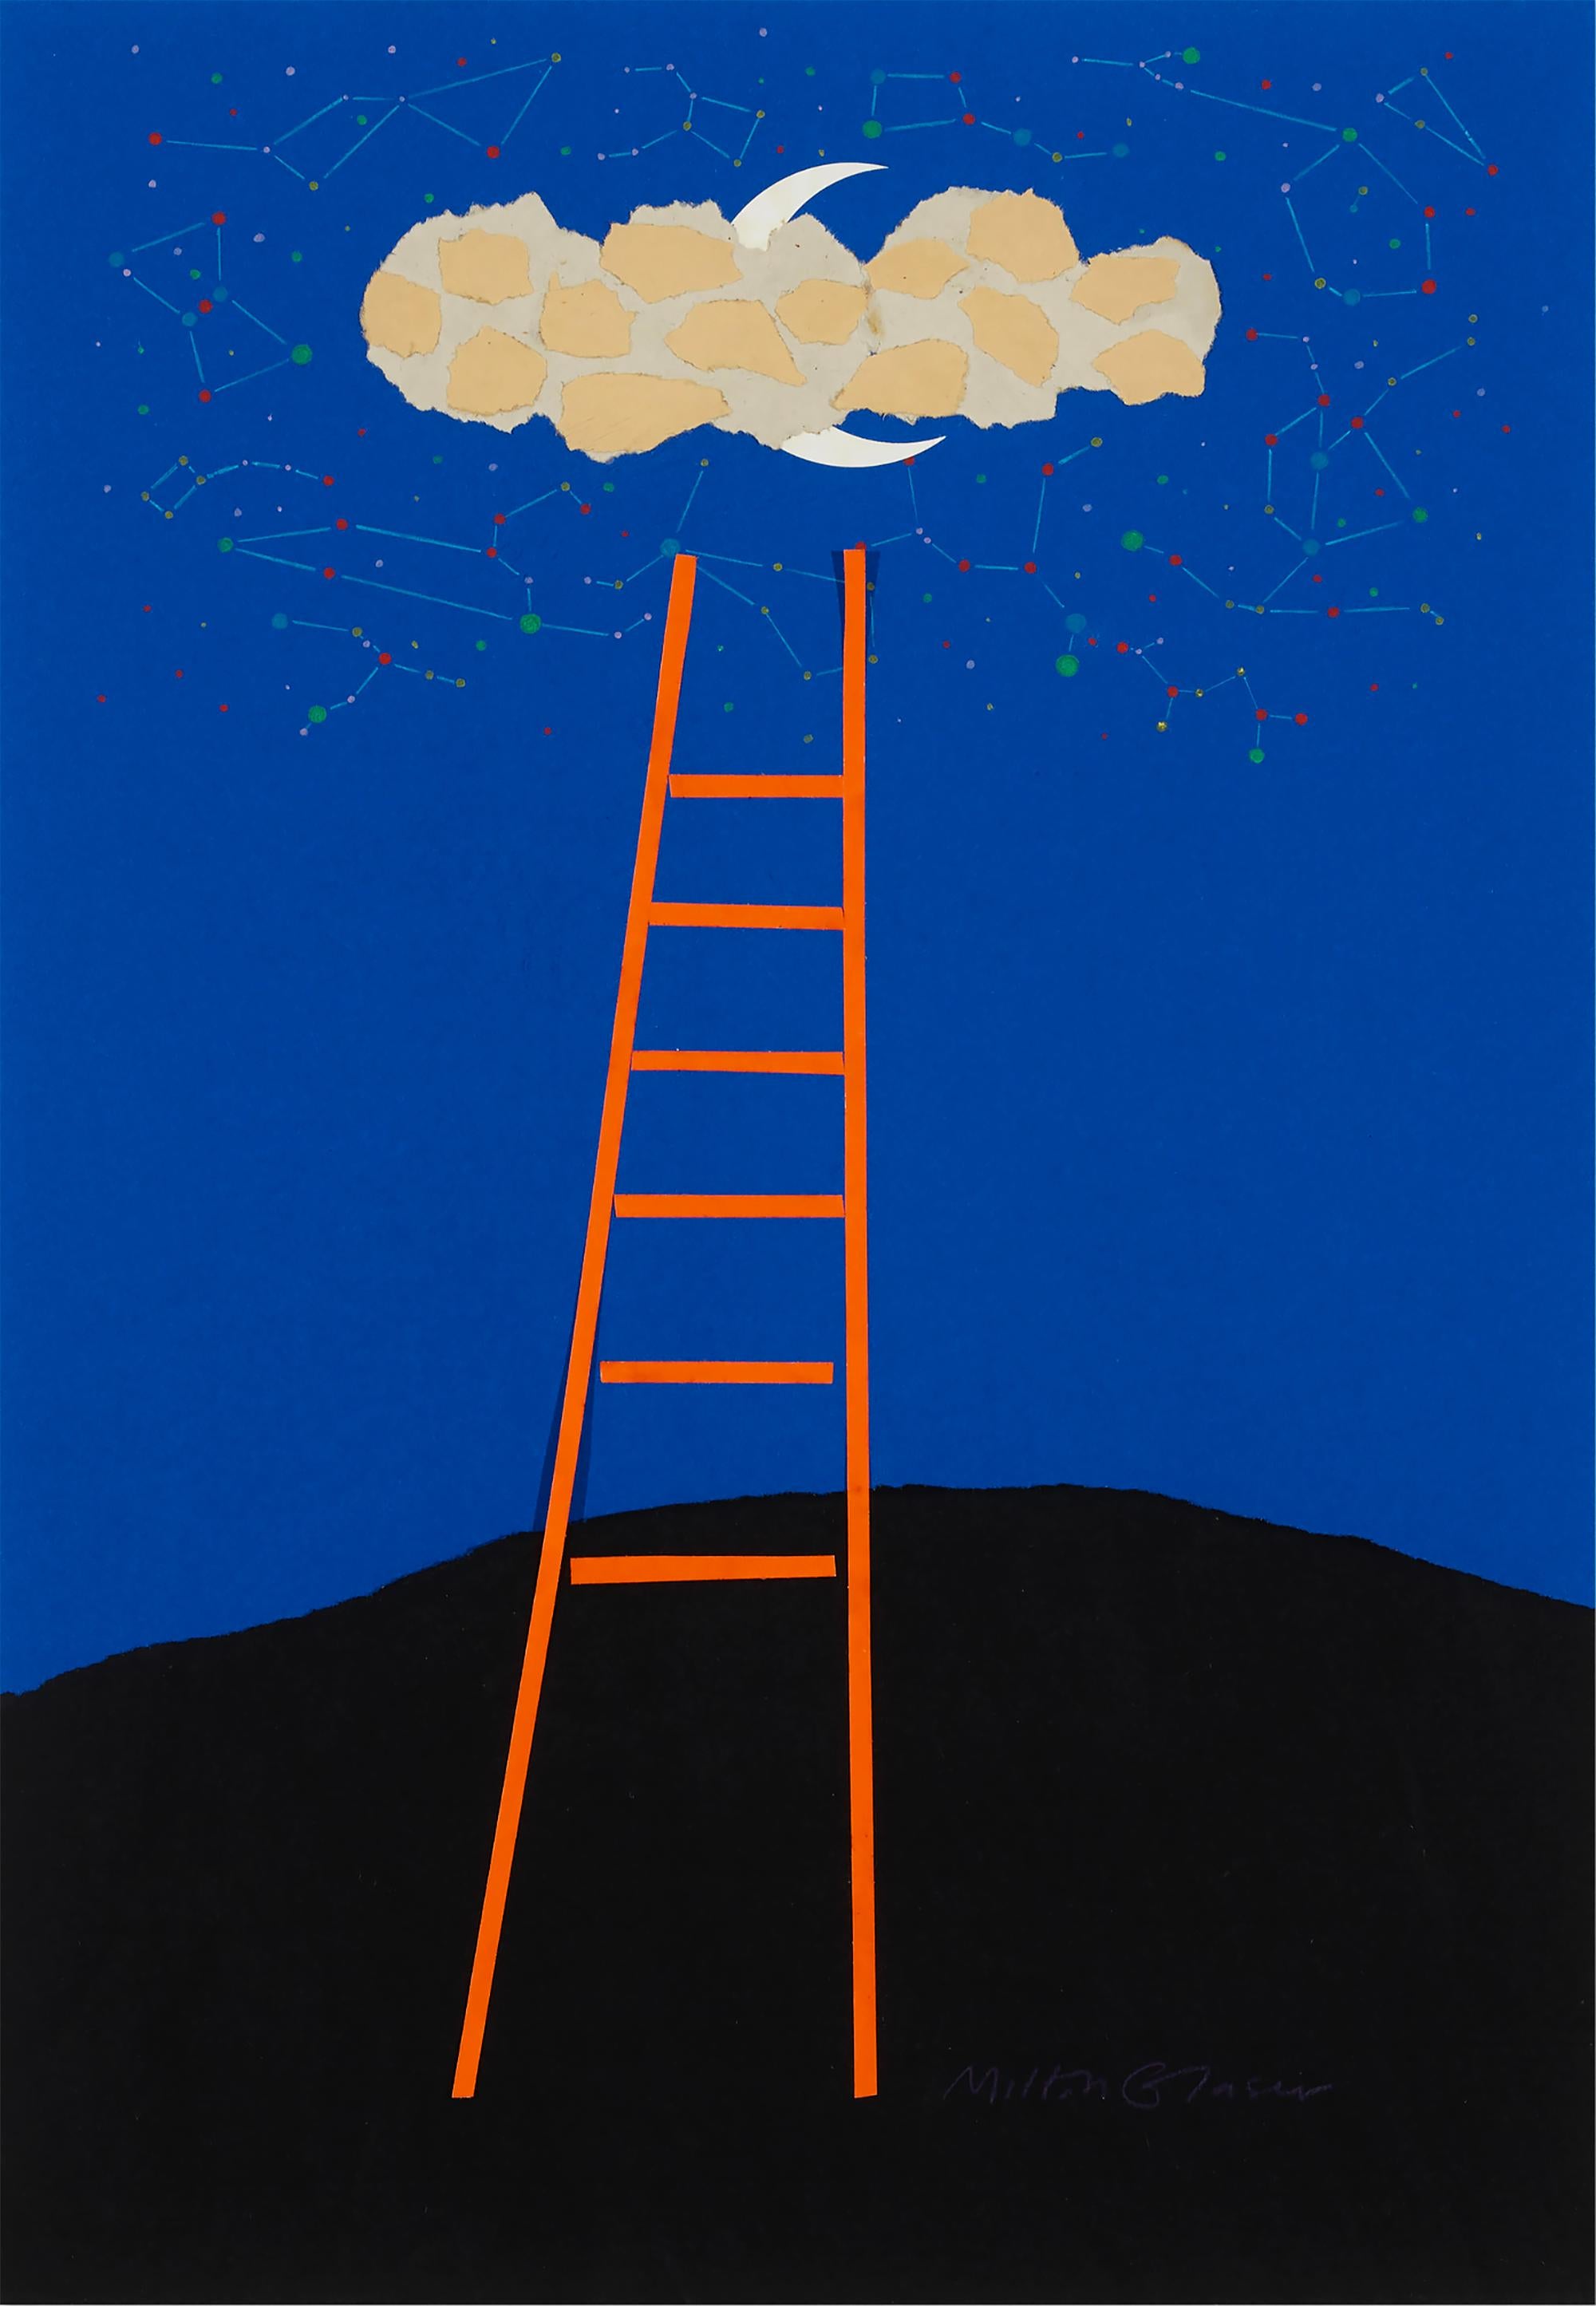 Juilliard School of Music (Ladder) poster - Original art - Mixed Media Art by Milton Glaser